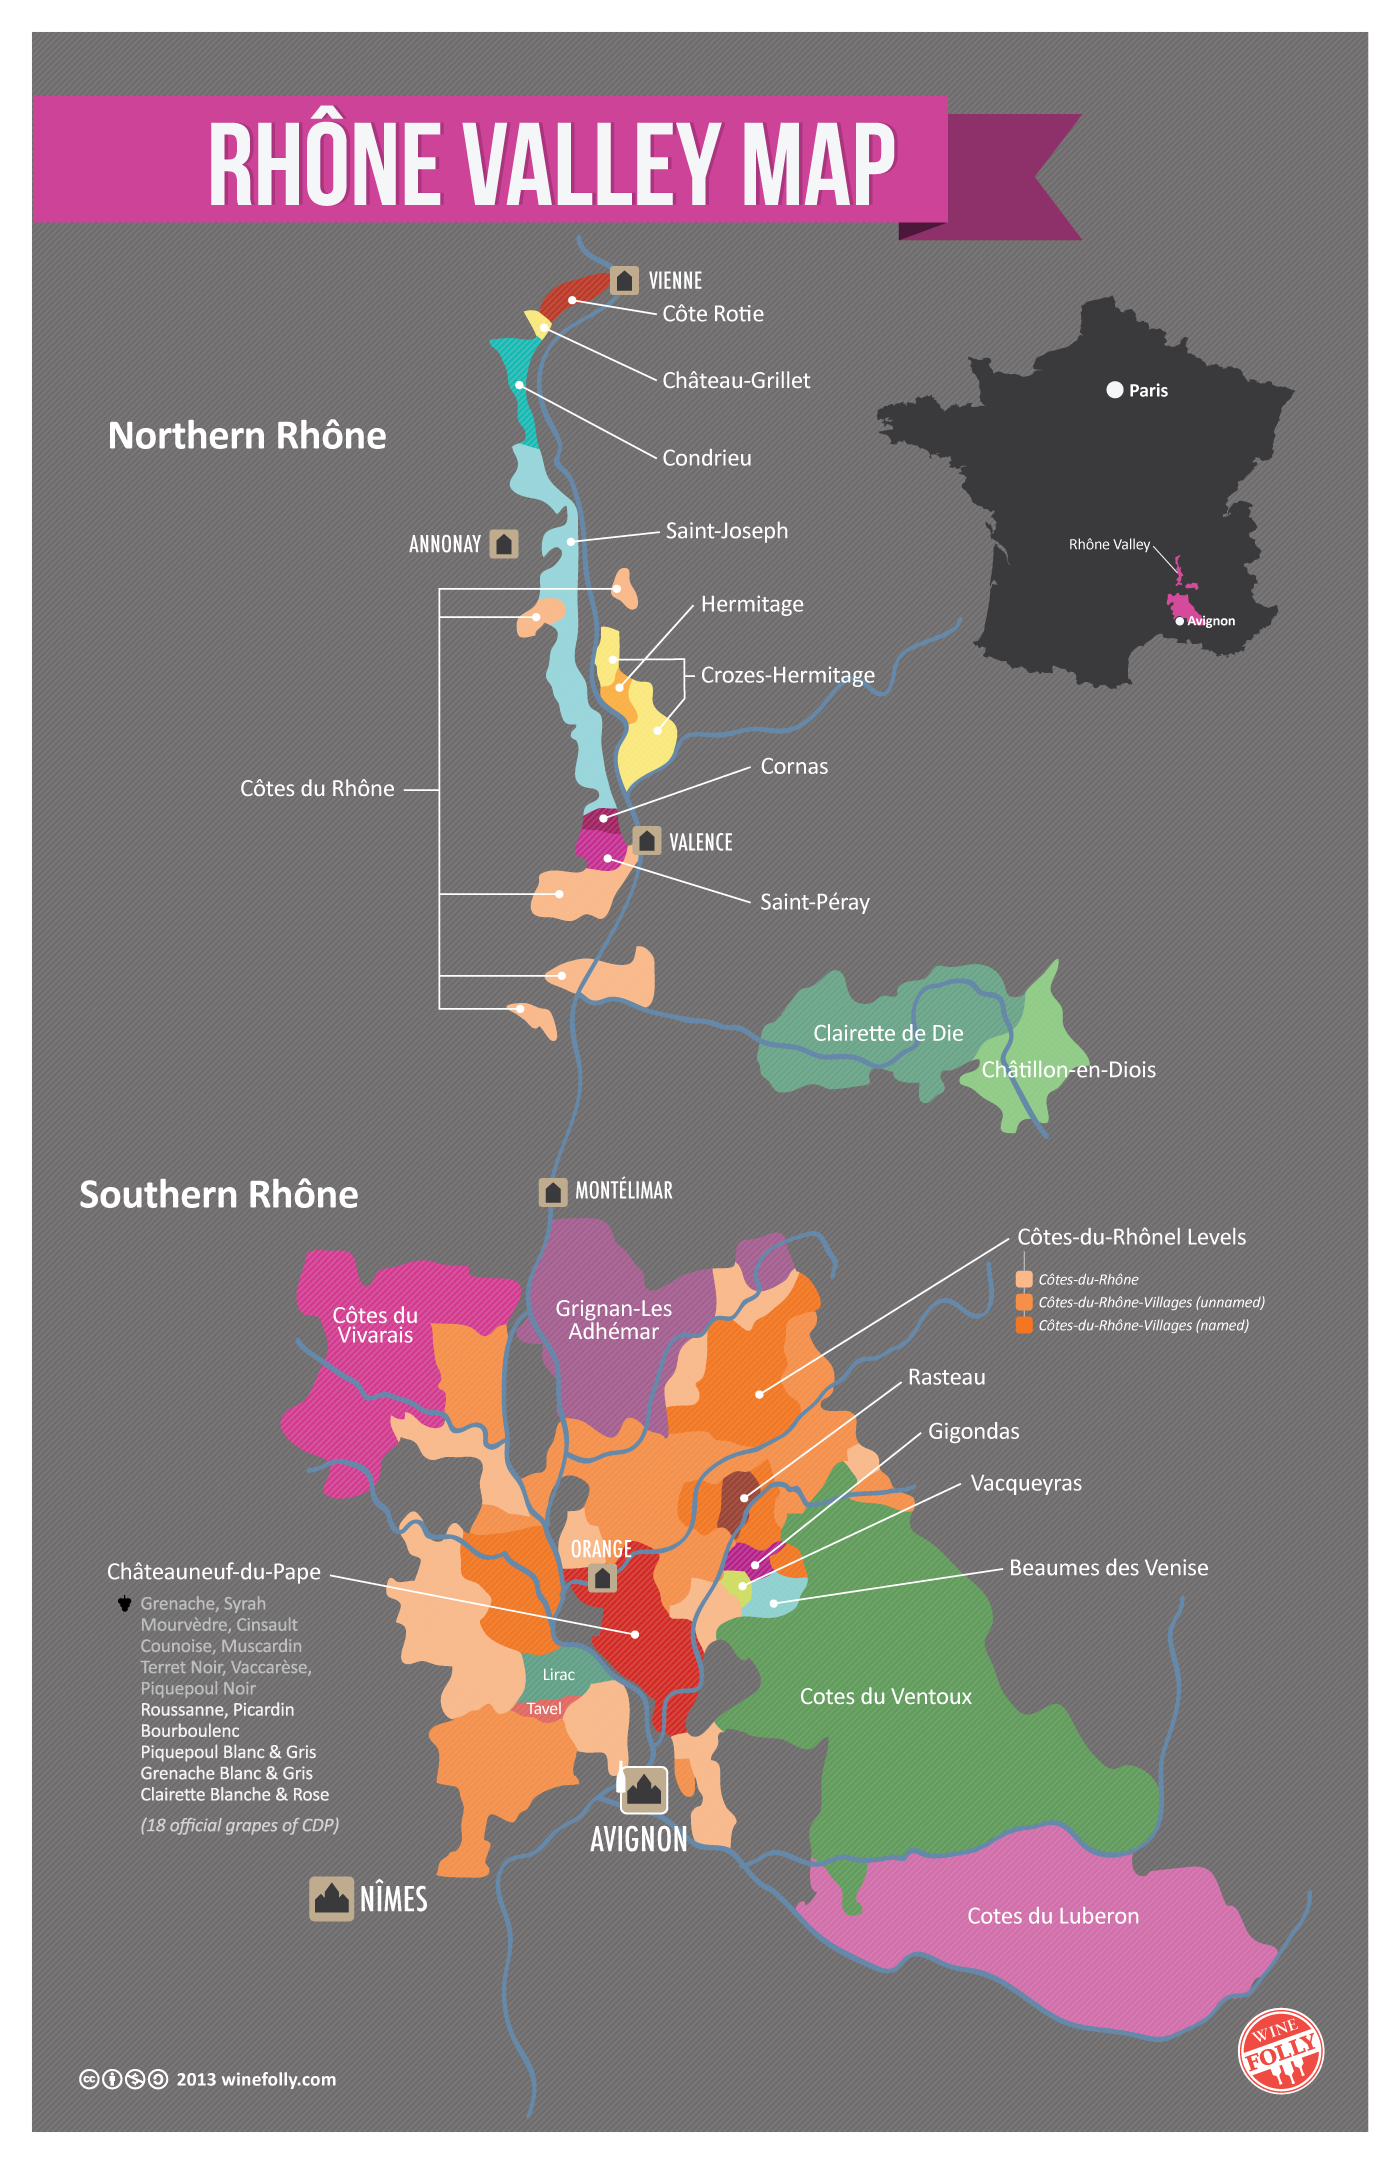 Cotes-du-Rhone-Wine-Region-Map1